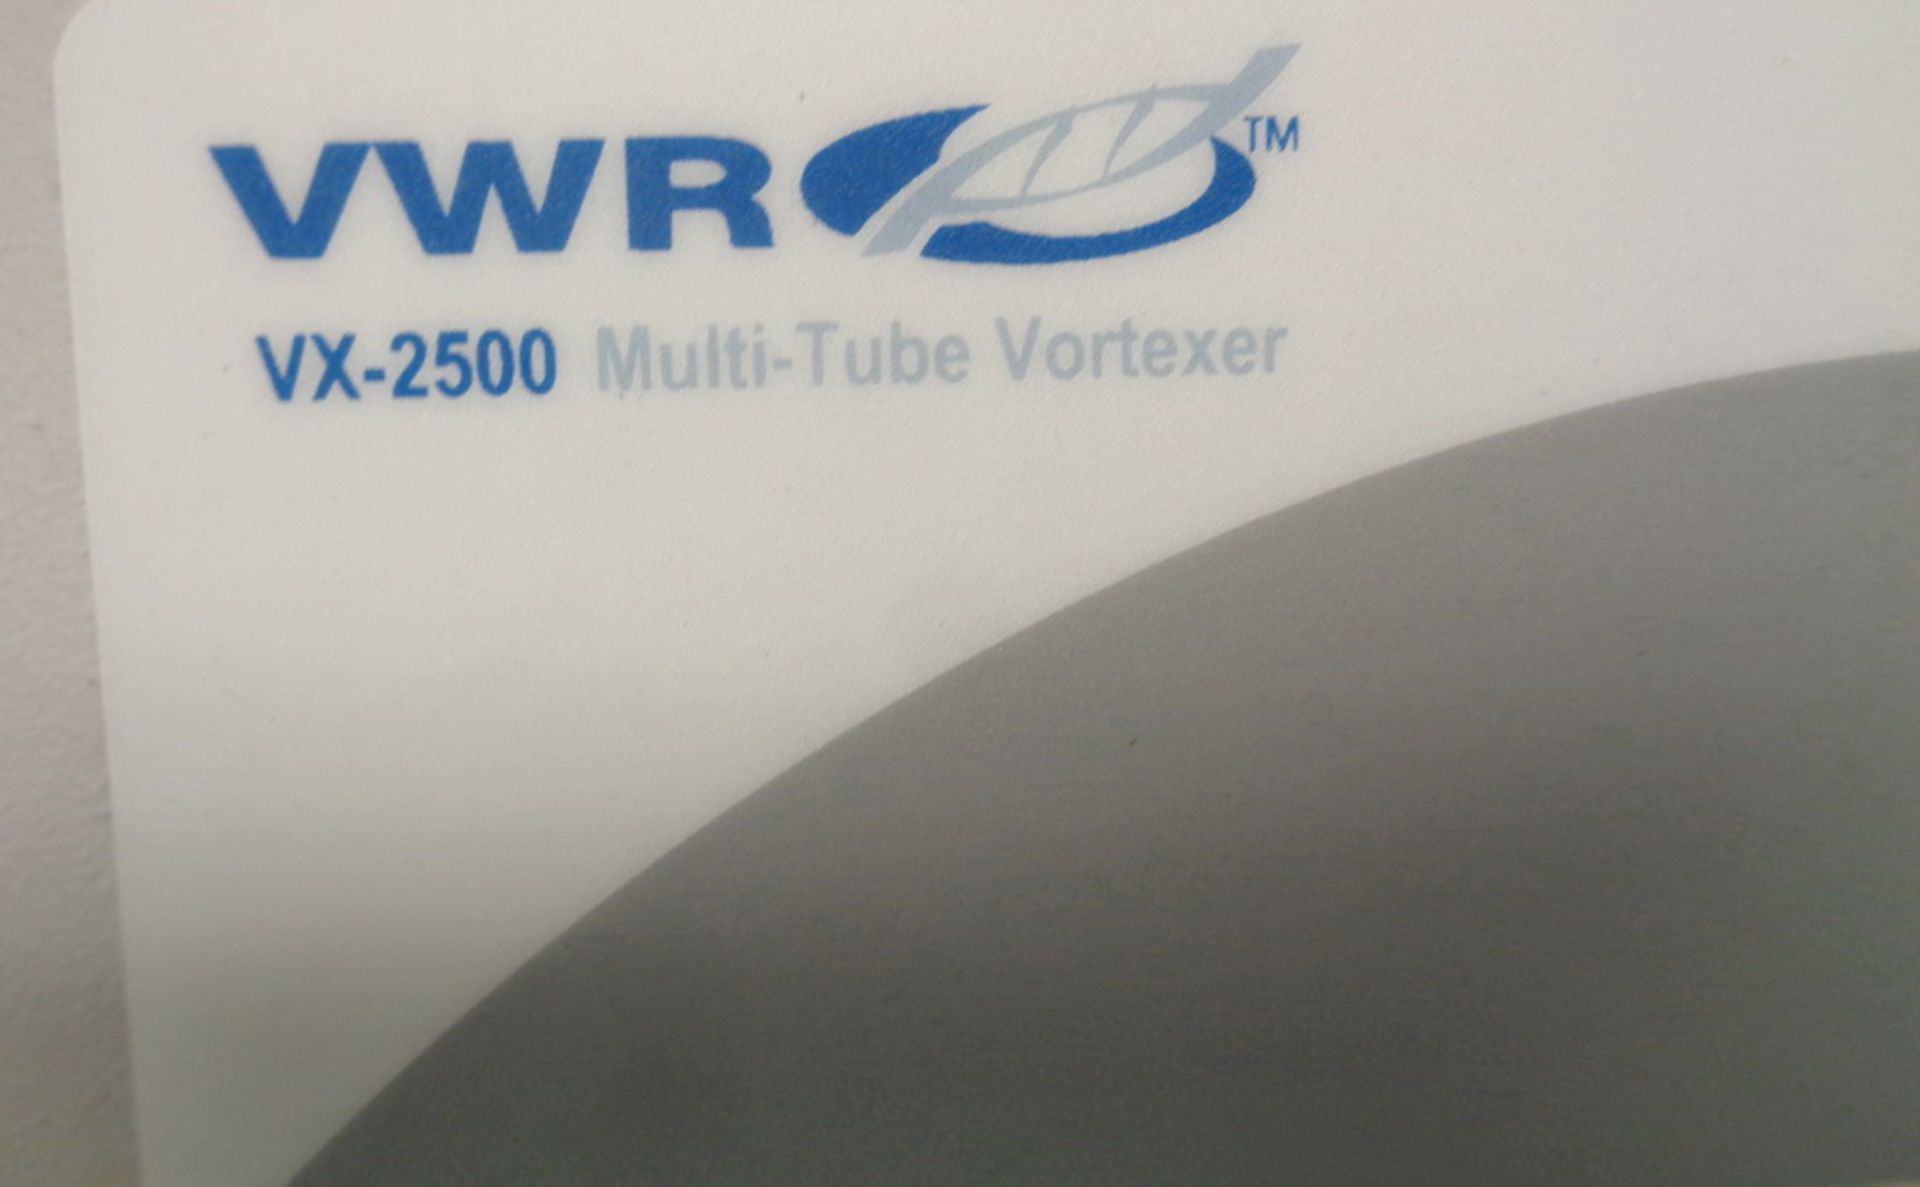 VWR Multi-Tube VX-2500 Vortexer - Image 2 of 2